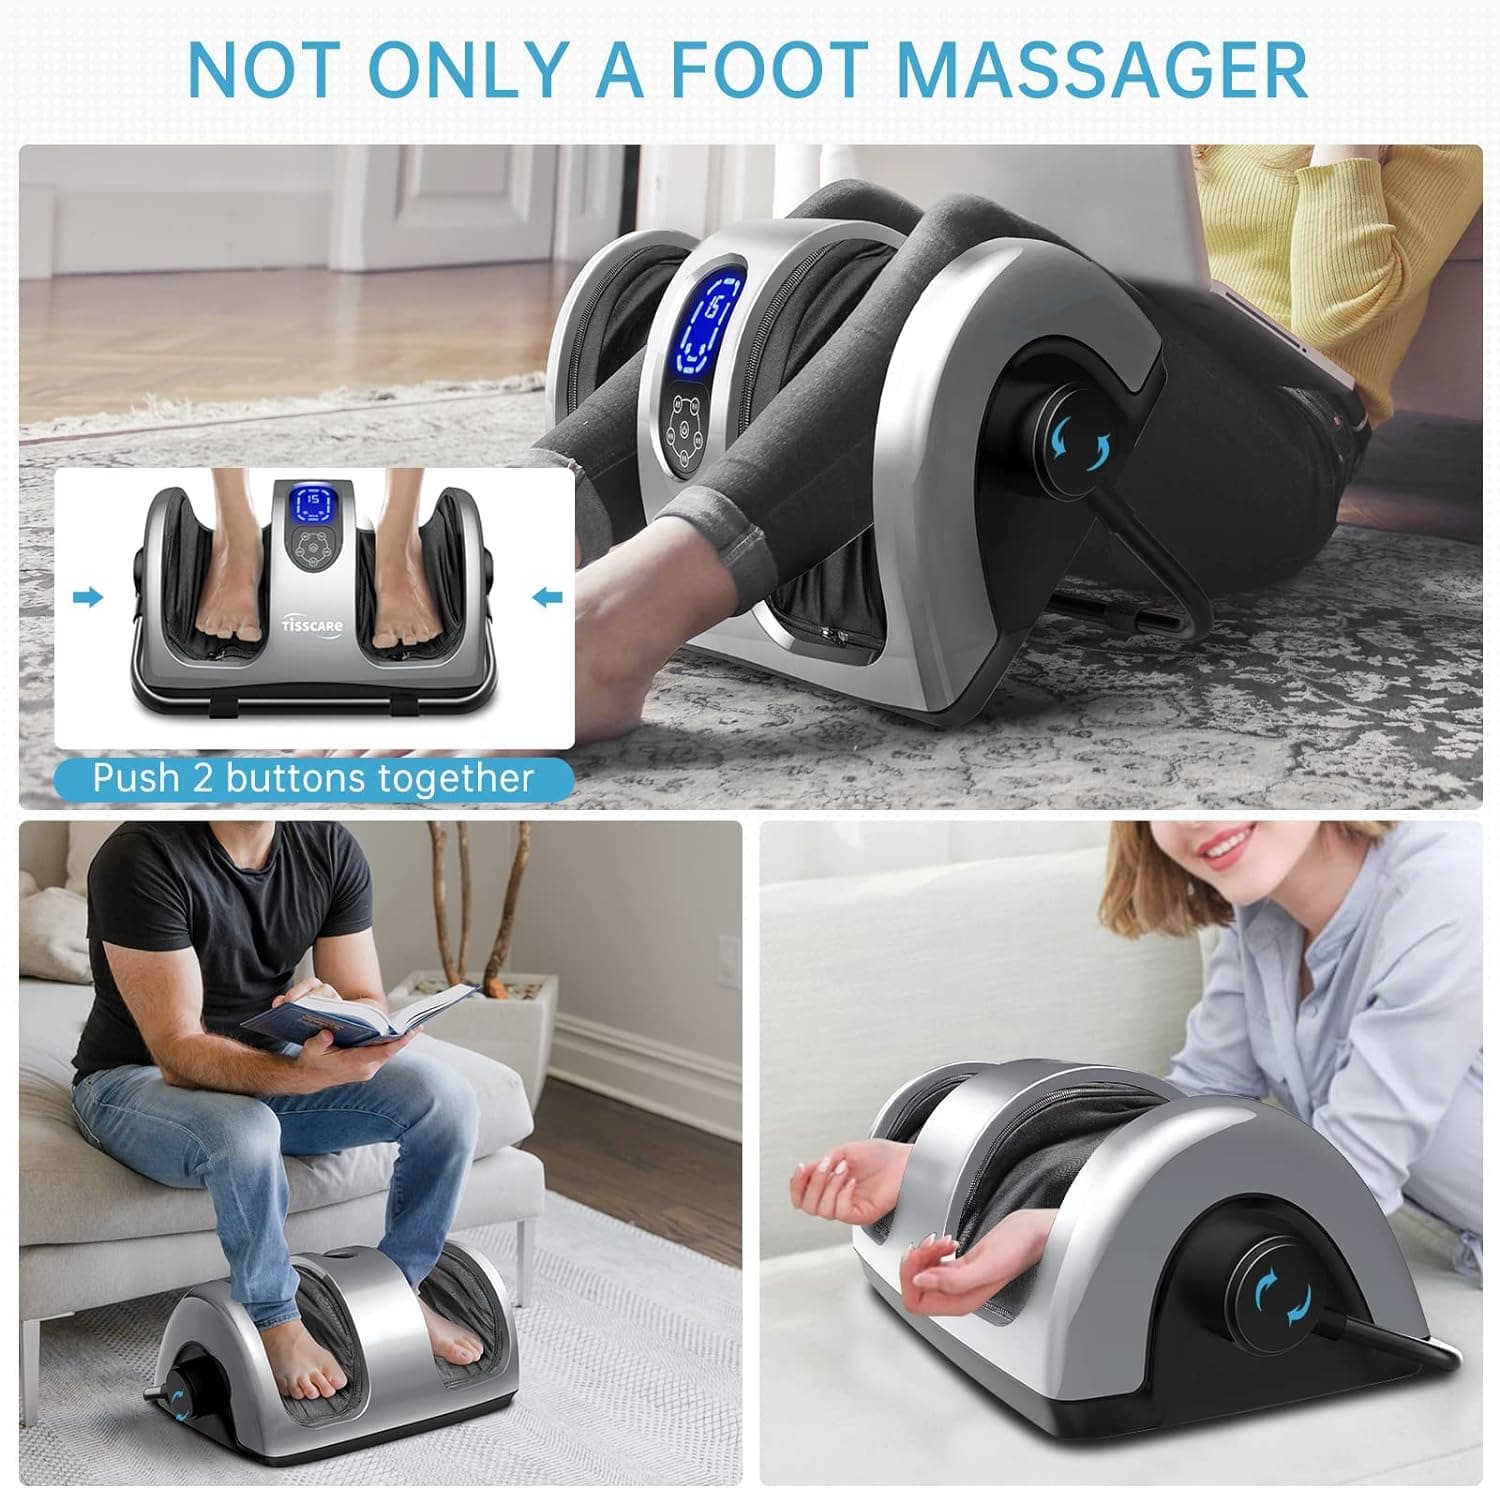 TISSCARE Shiatsu Massage Foot Massager Machine - Improves Blood Flow Circulation, Deep Kneading & Tissue with Heat/Remote, Neuropathy, Plantar Fasciitis, Diabetics, Pain Relief